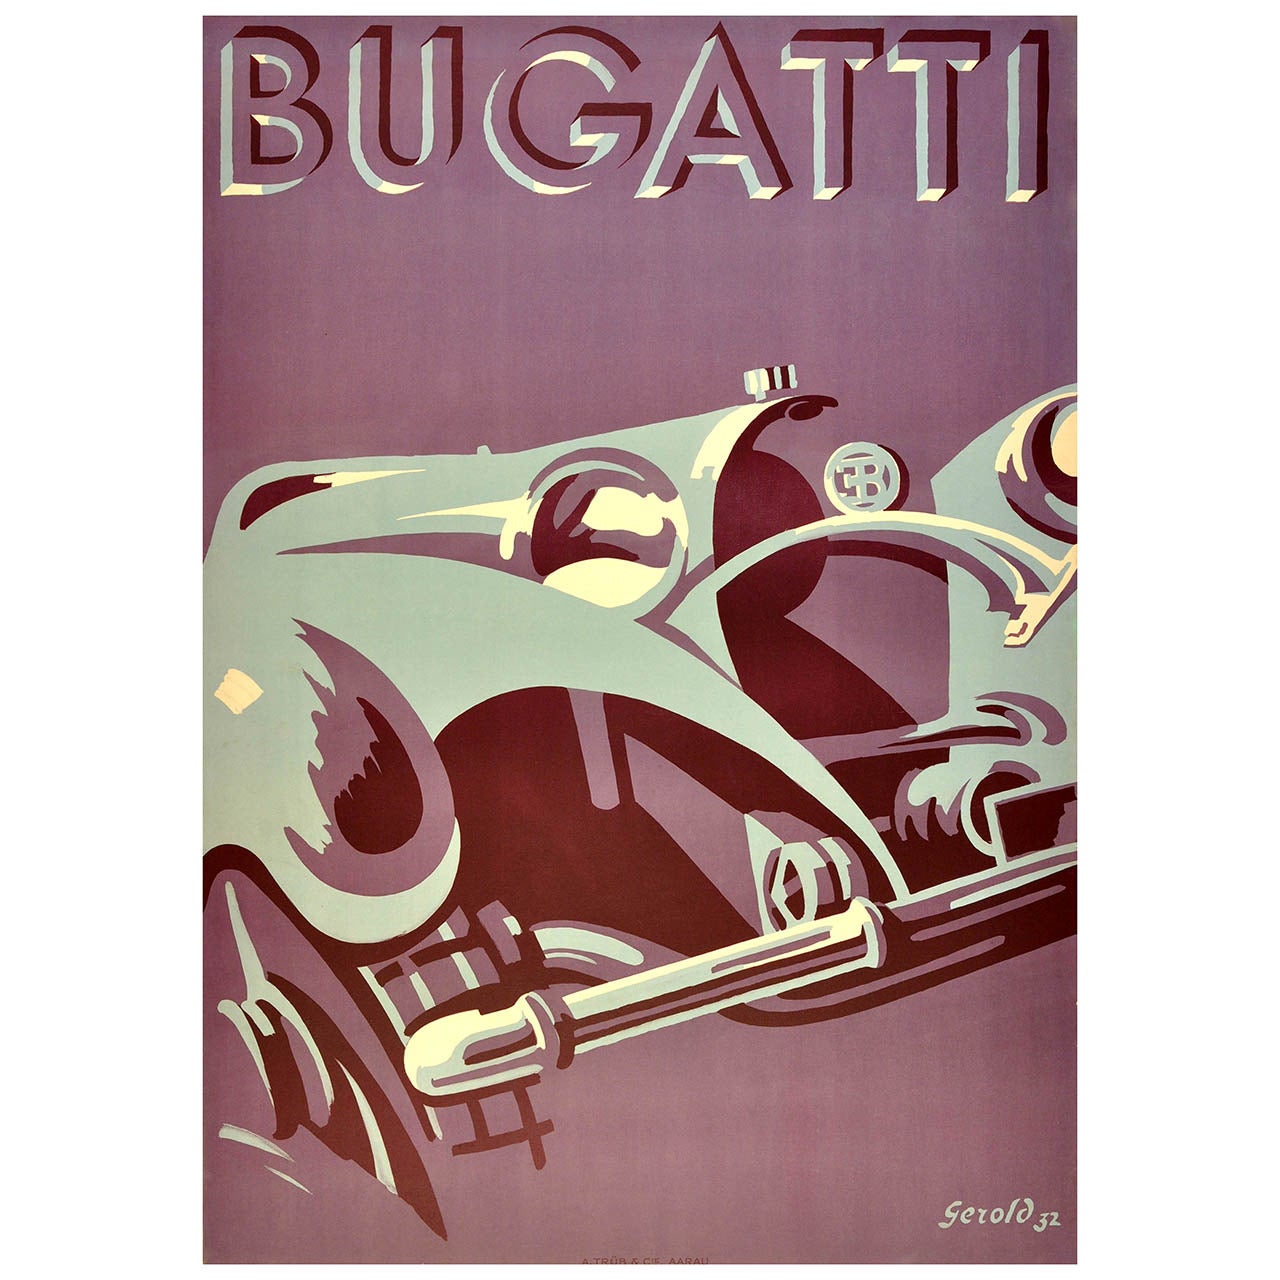 Original Iconic Art Deco Bugatti Car Advertising Poster by Gerold Hunziker, 1932